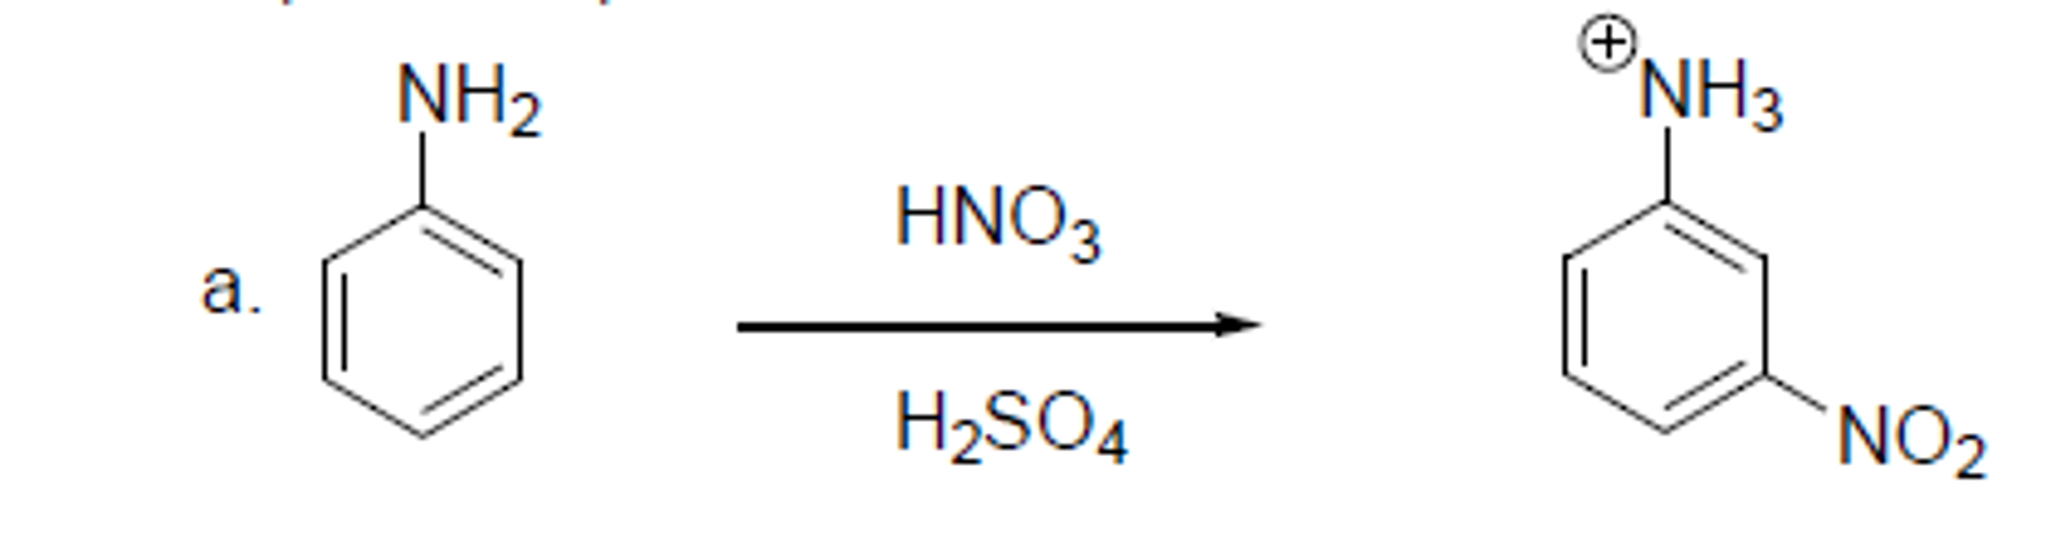 Nh3 р р hno3. Этилфениловый эфир формула. Анилин h2so4. C6h5nh2 hno2. Анилин hno3 h2so4.